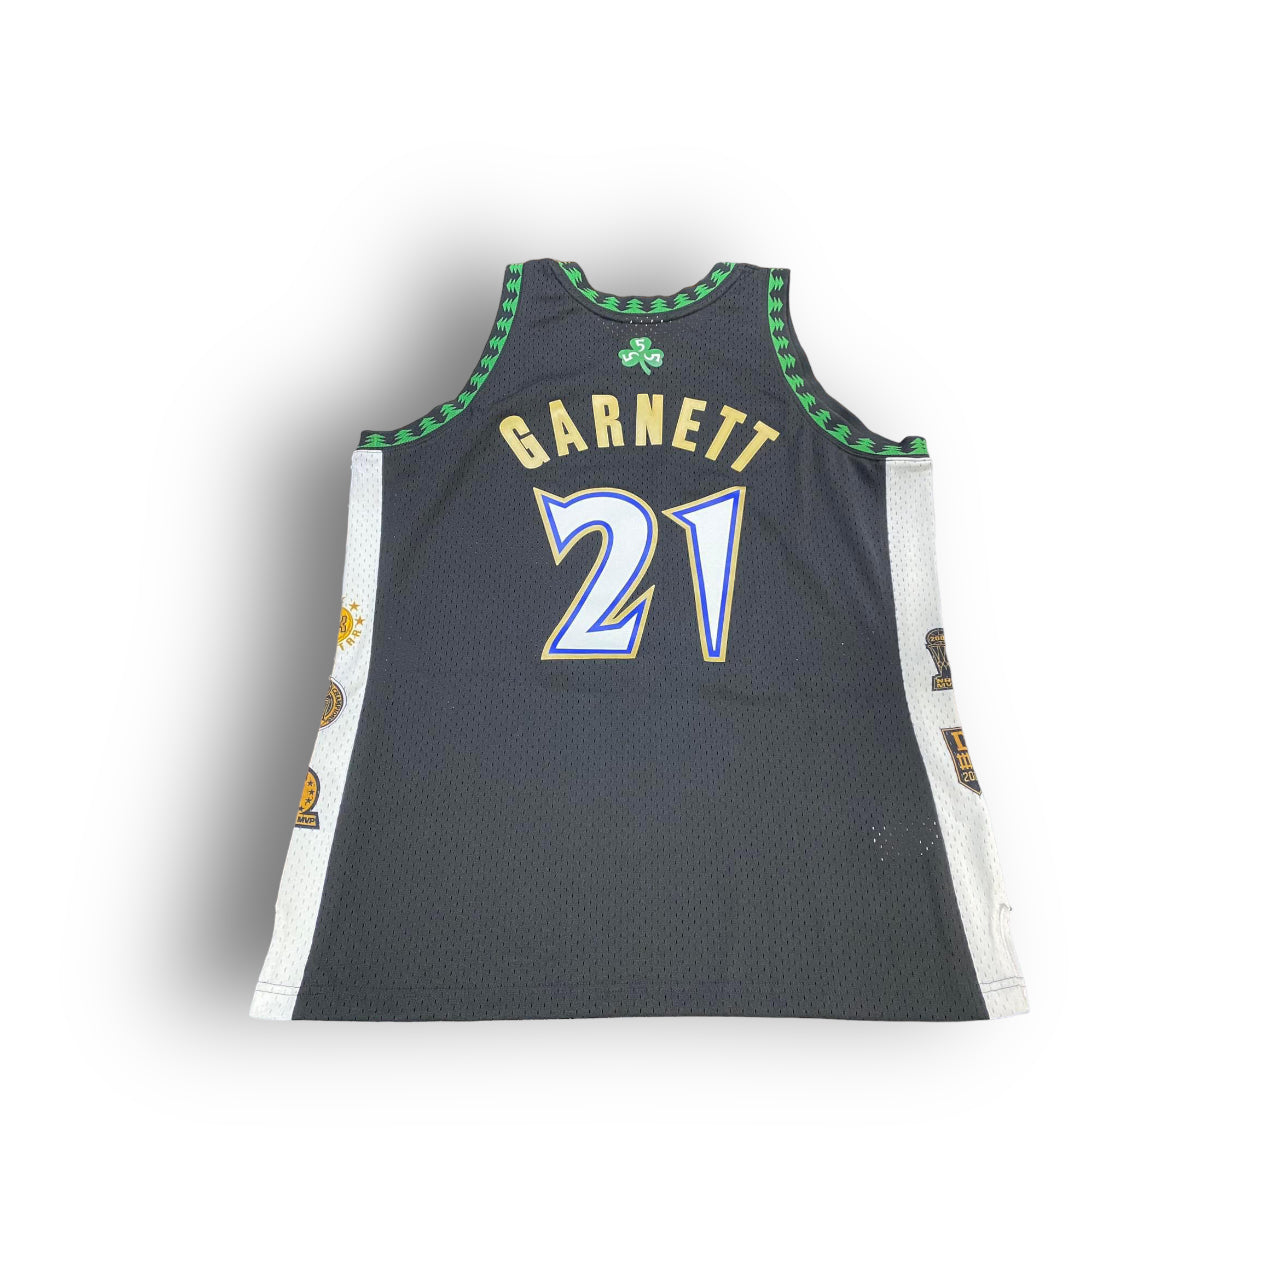 Kevin Garnett Boston Celtics x Minnesota Timberwolves Hall of Fame Player Special Edition Mitchell & Ness Swingman Jersey - Black White Green